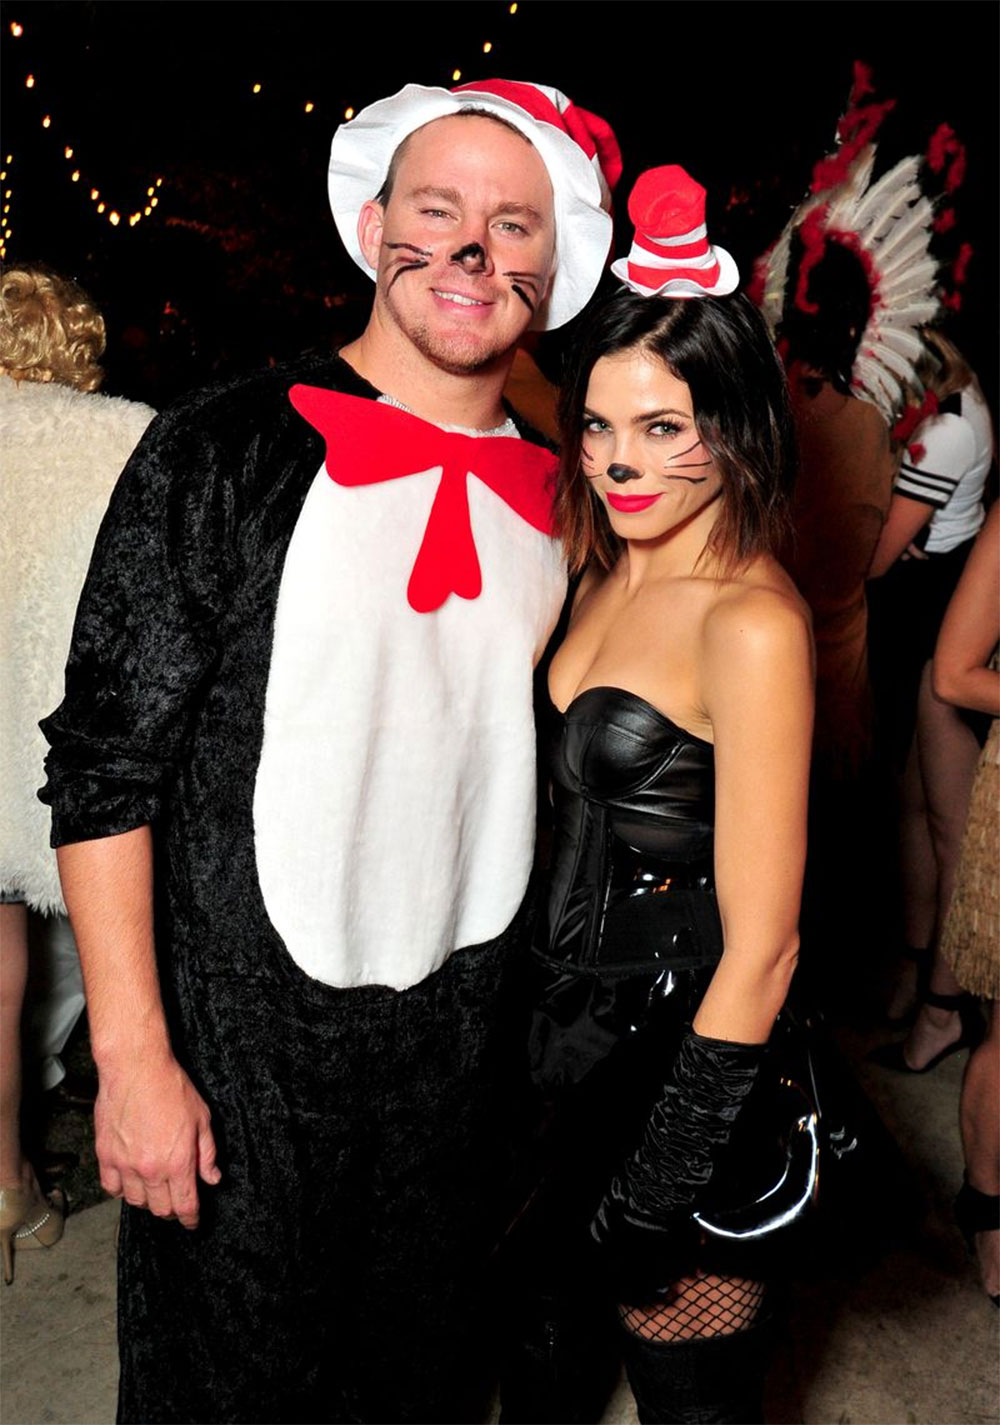 Channing Tatum and Jenna Dewan-Tatum dressed up as Dr Seuss' Cat in the Hat... awww!